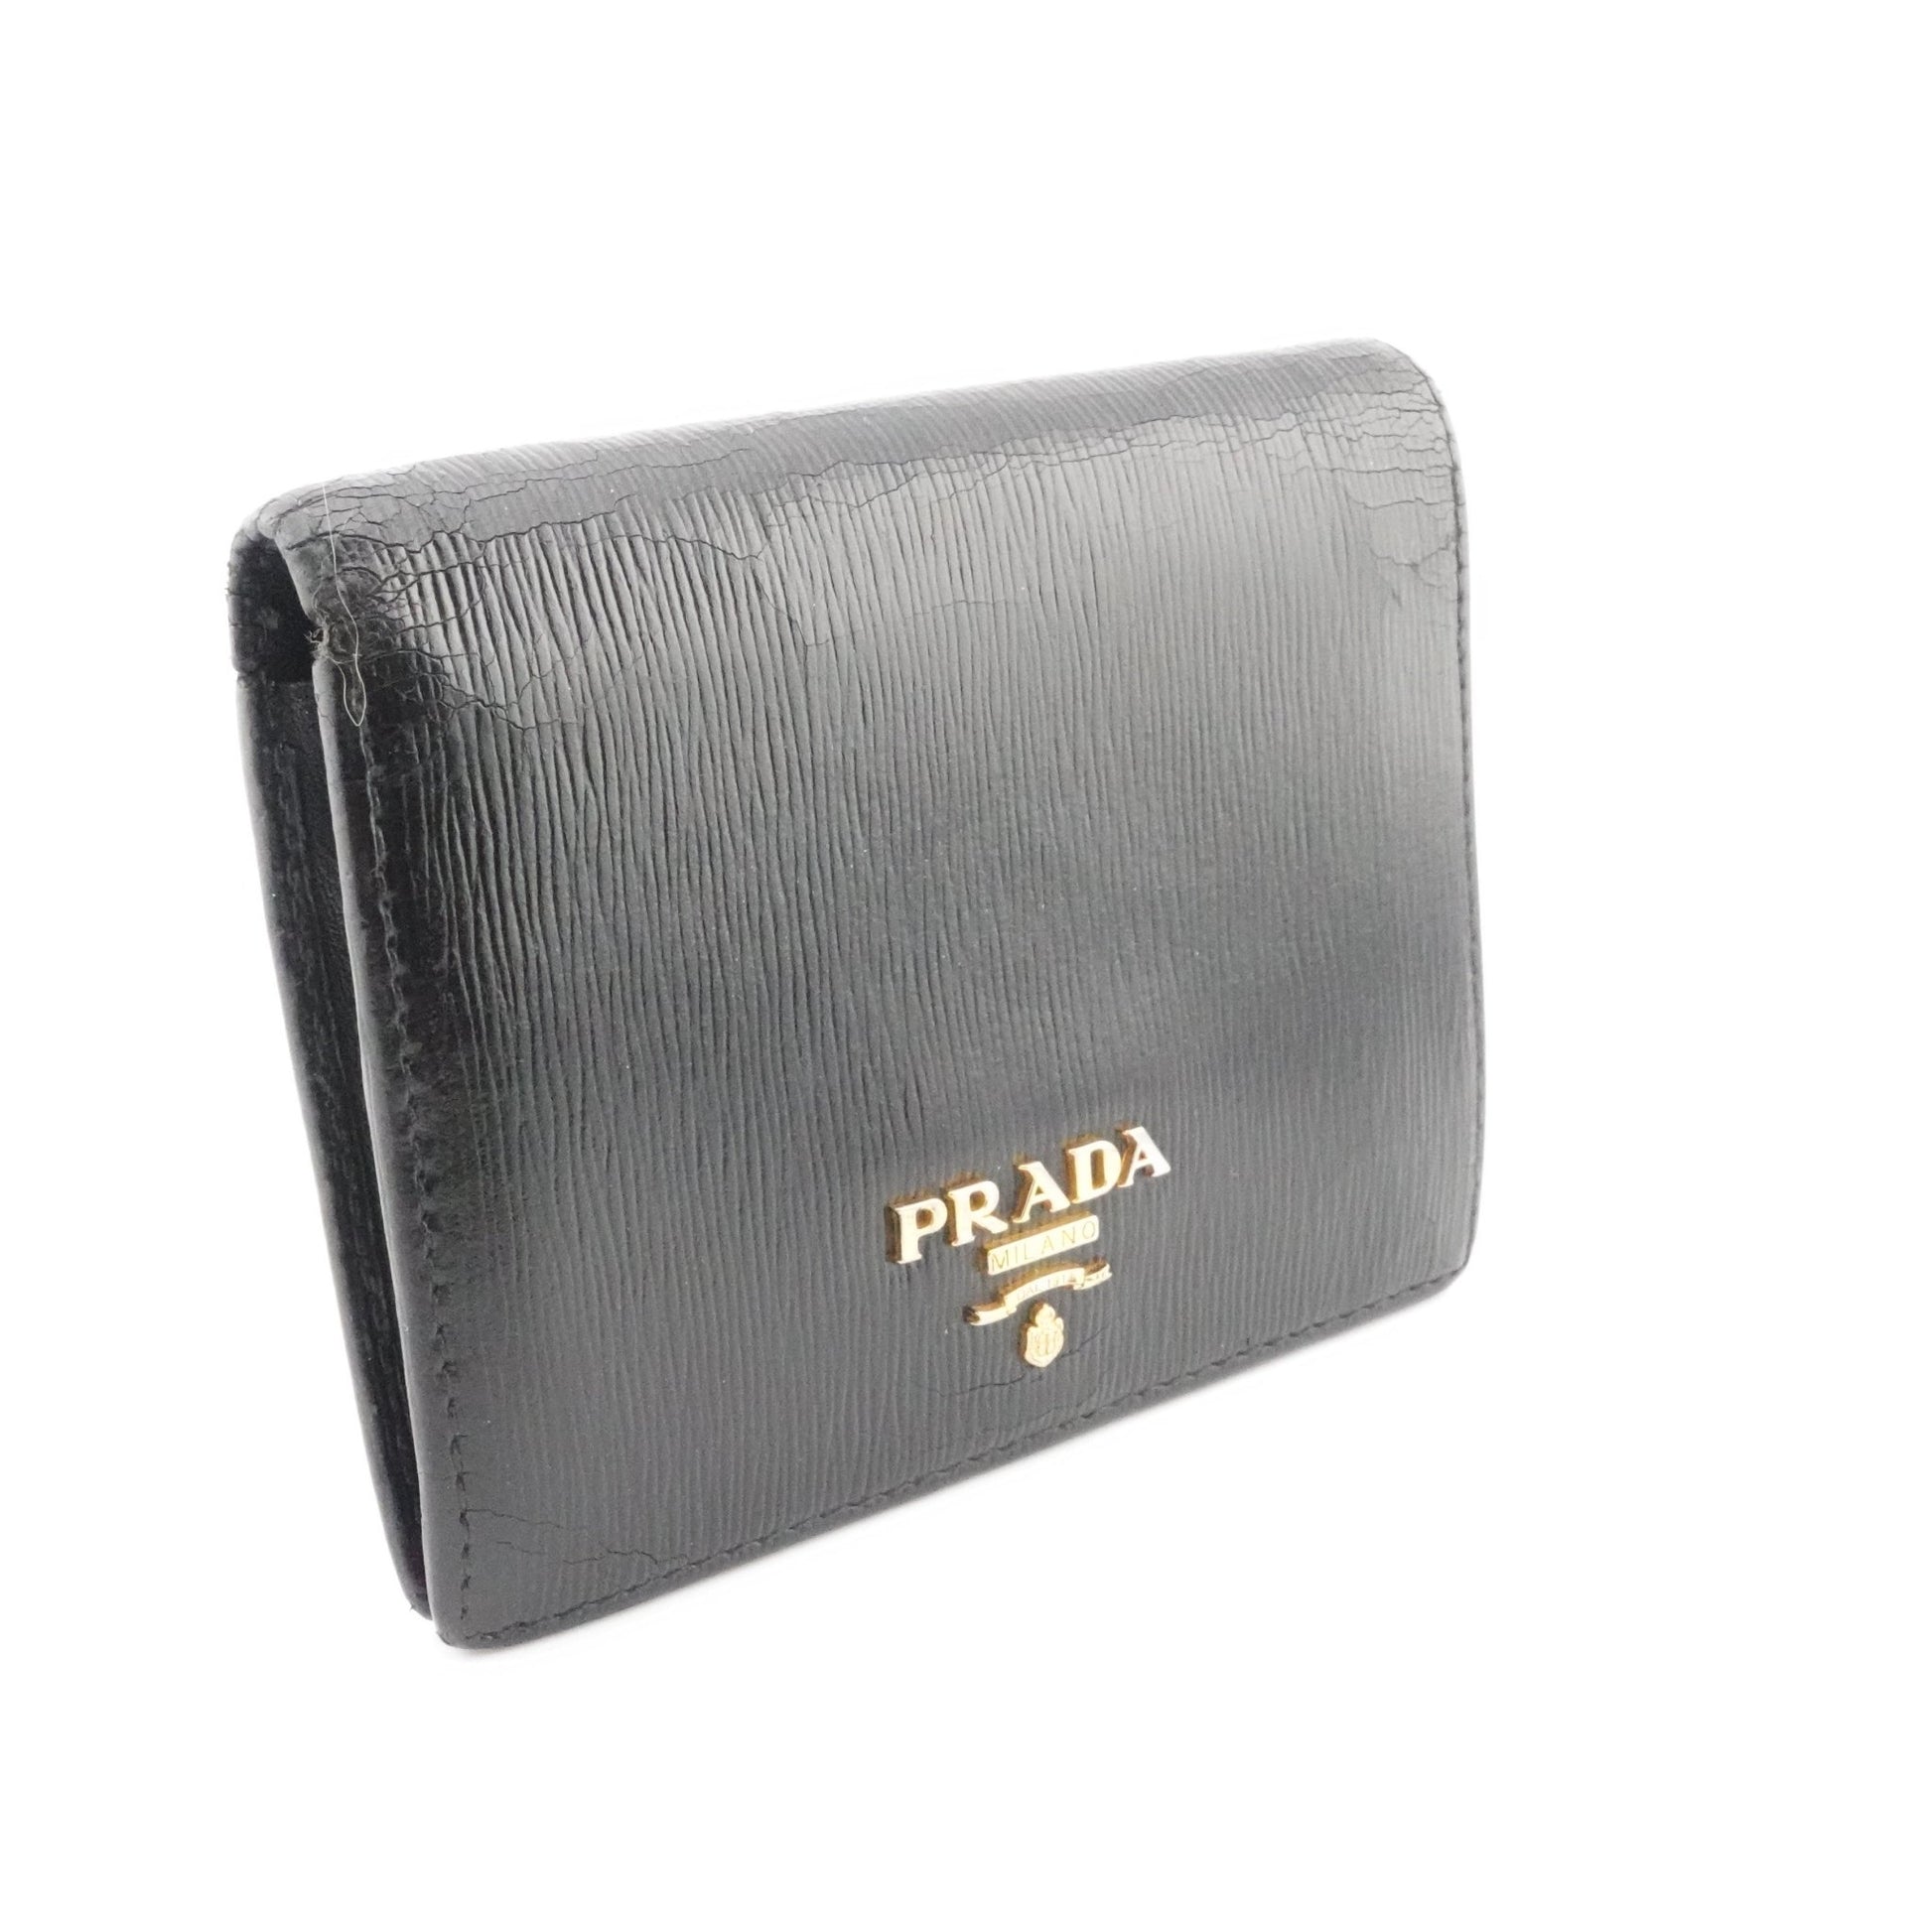 PRADA Vitello Move Leather Compact Wallet - Bag Envy